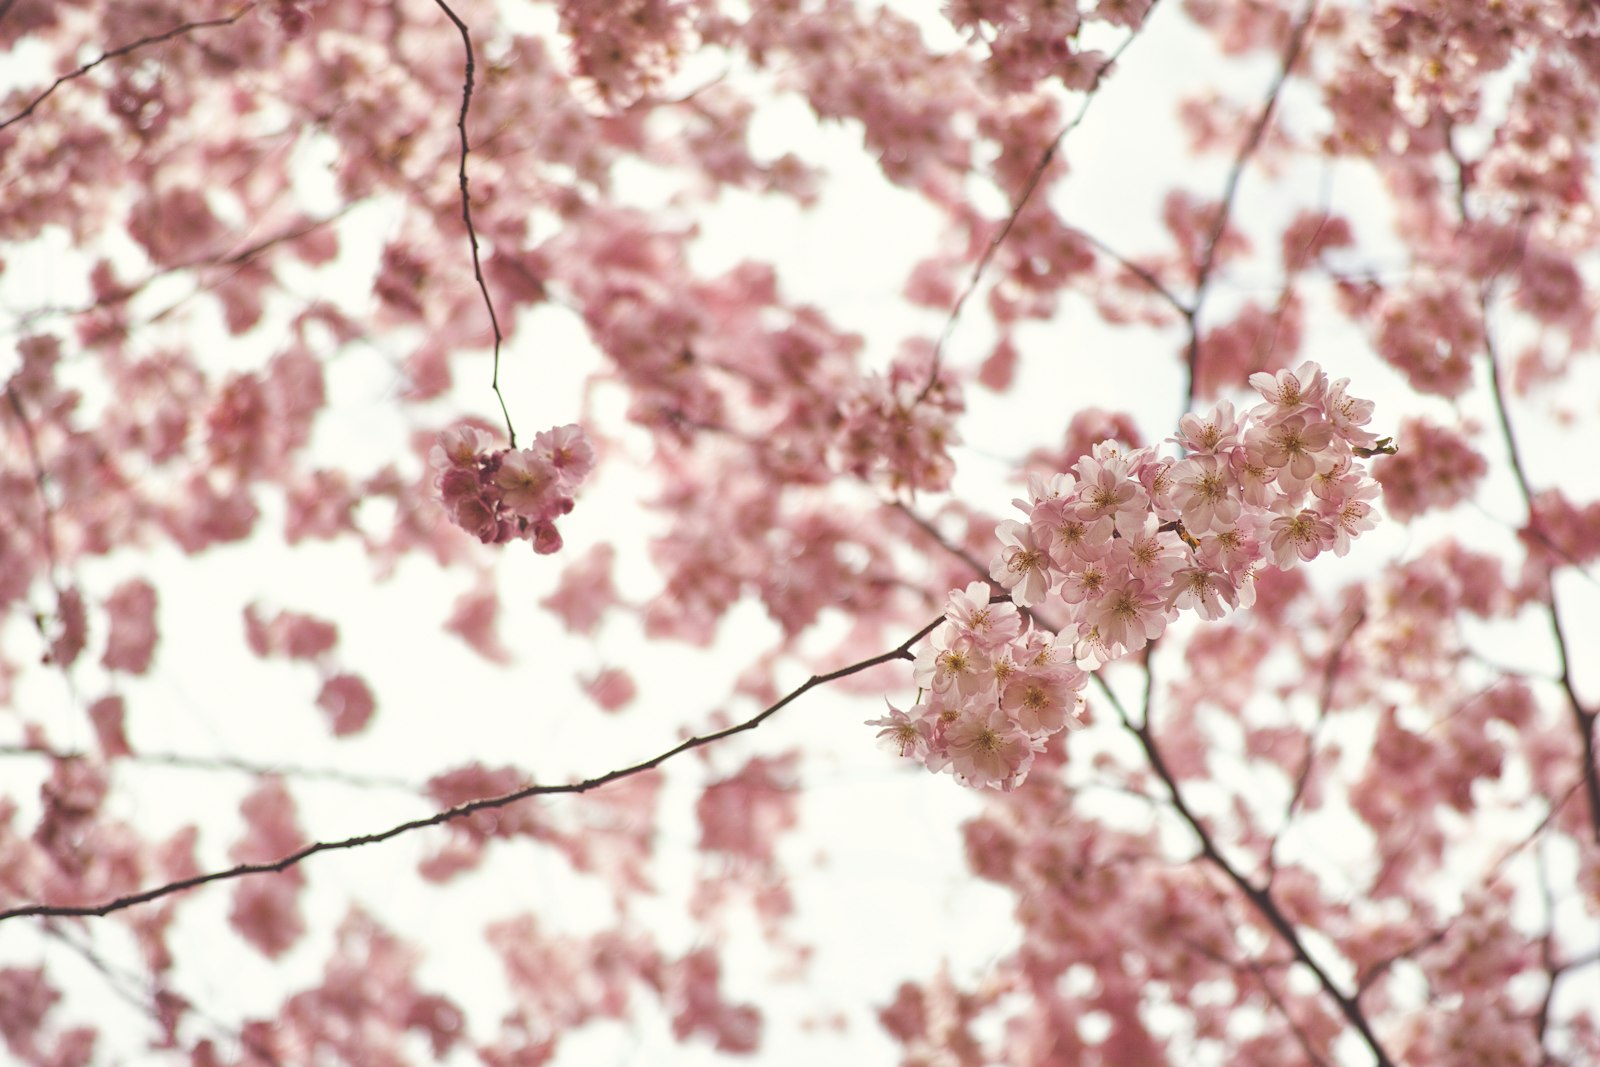 Sigma DP3 Merrill sample photo. Pink cherry blossom tree photography